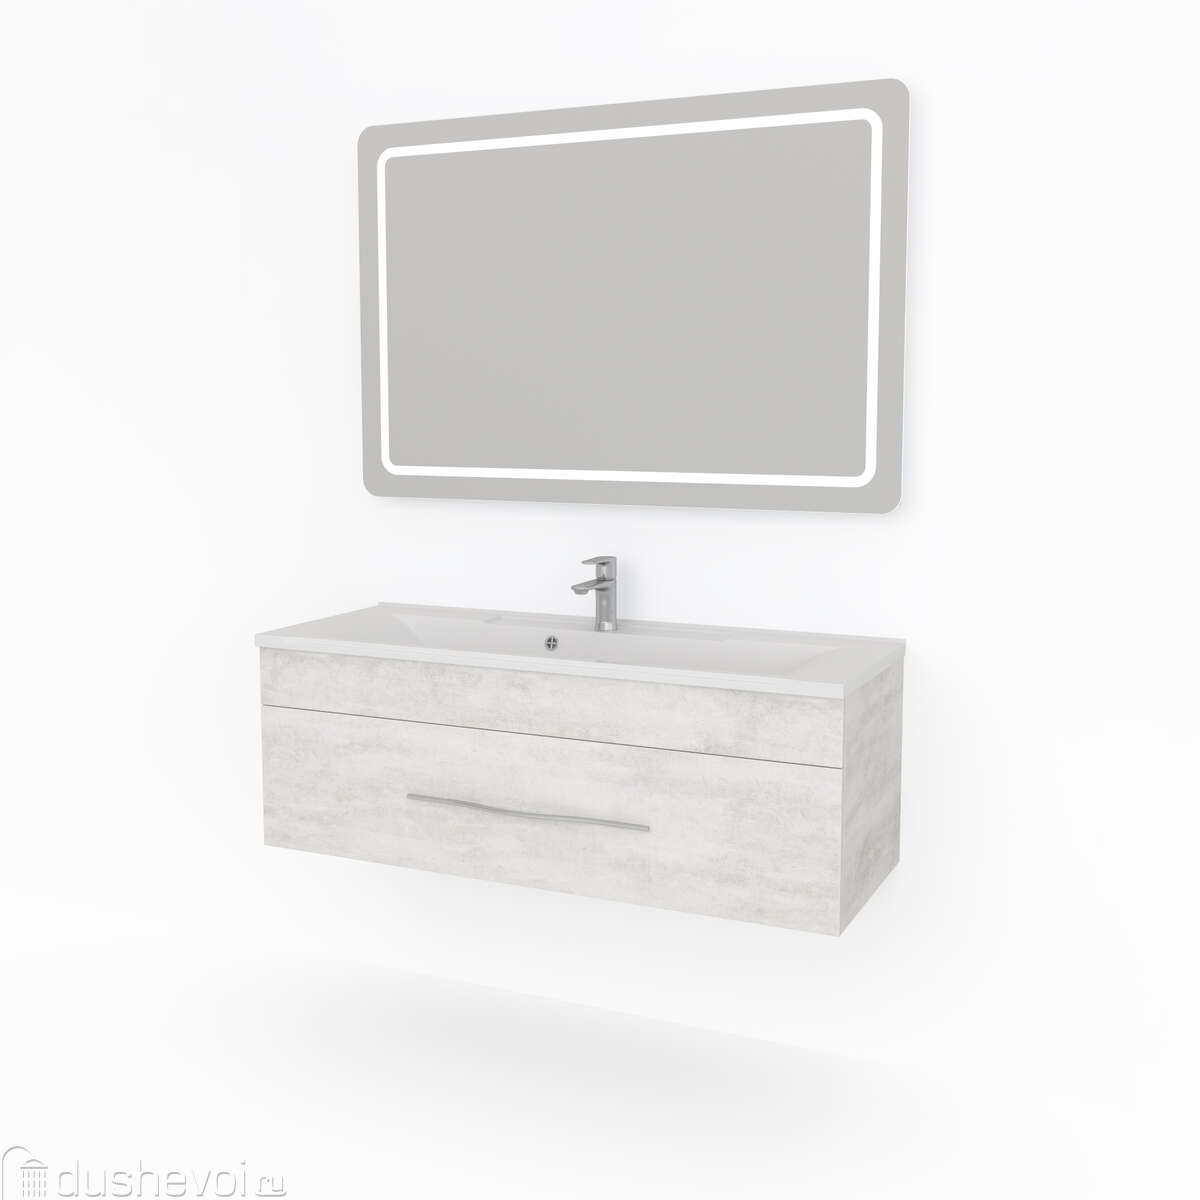 мебель для ванной комнаты какса